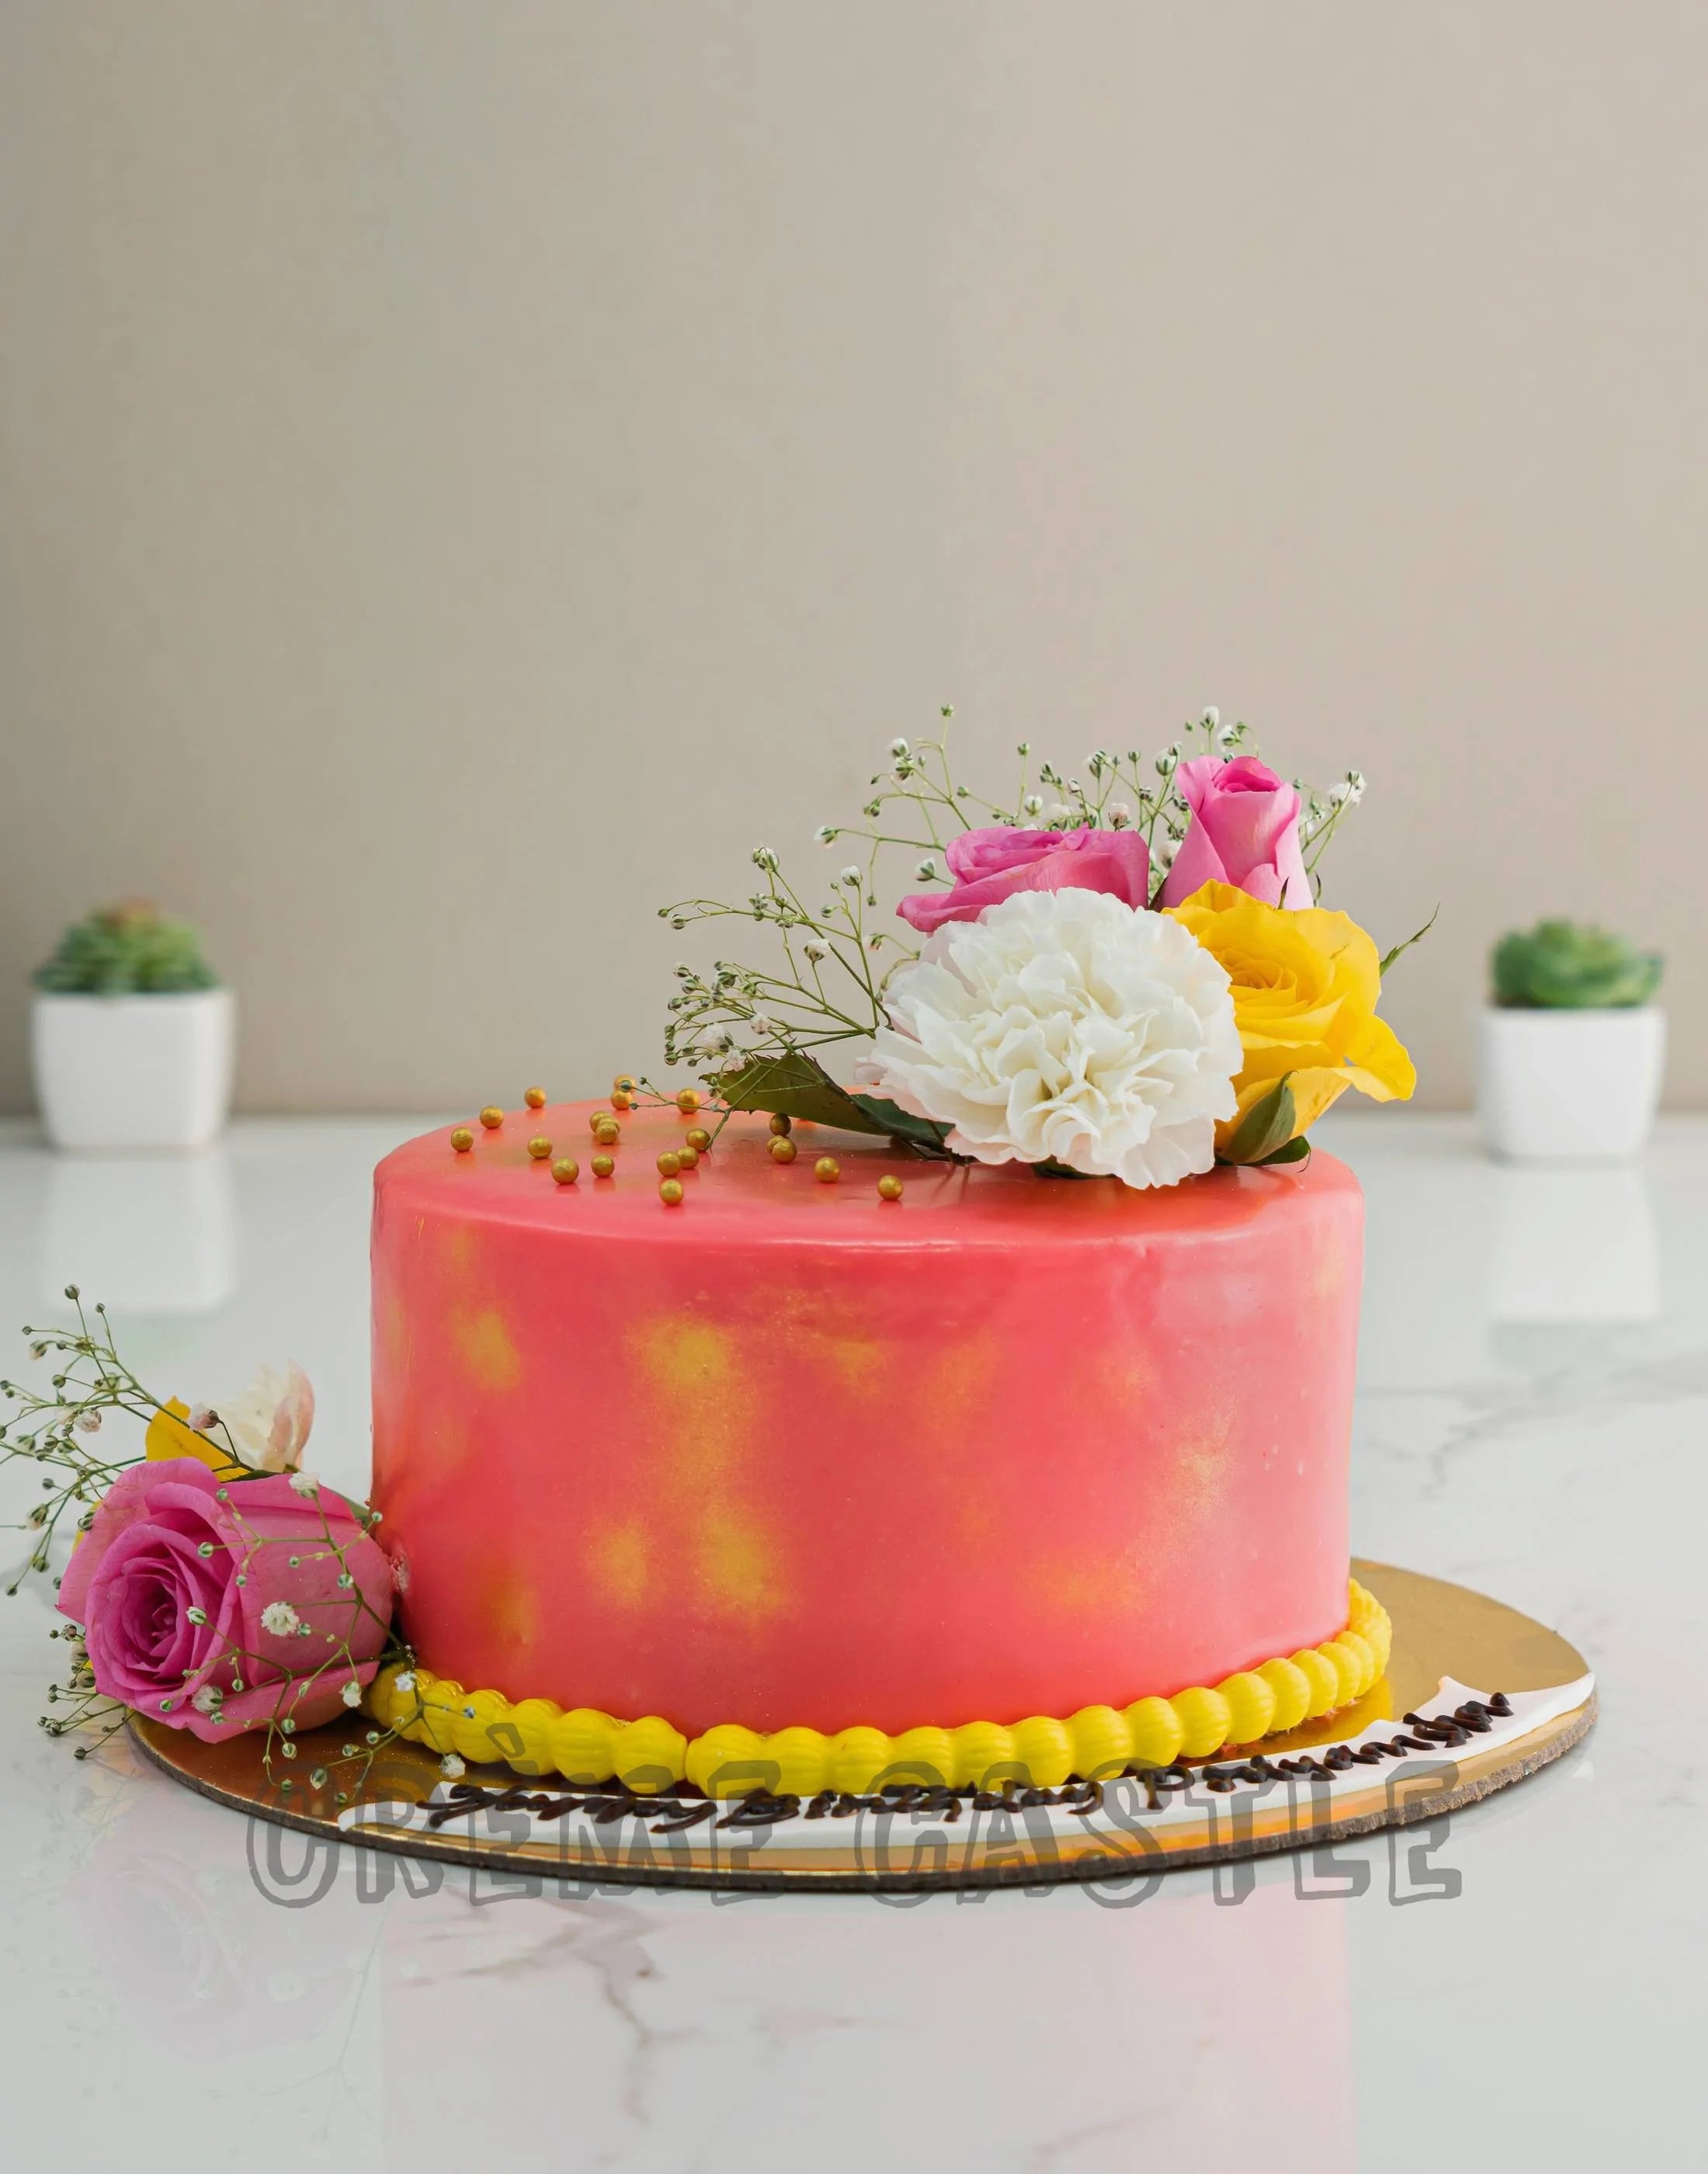 Design your own cake - Corina Bakery